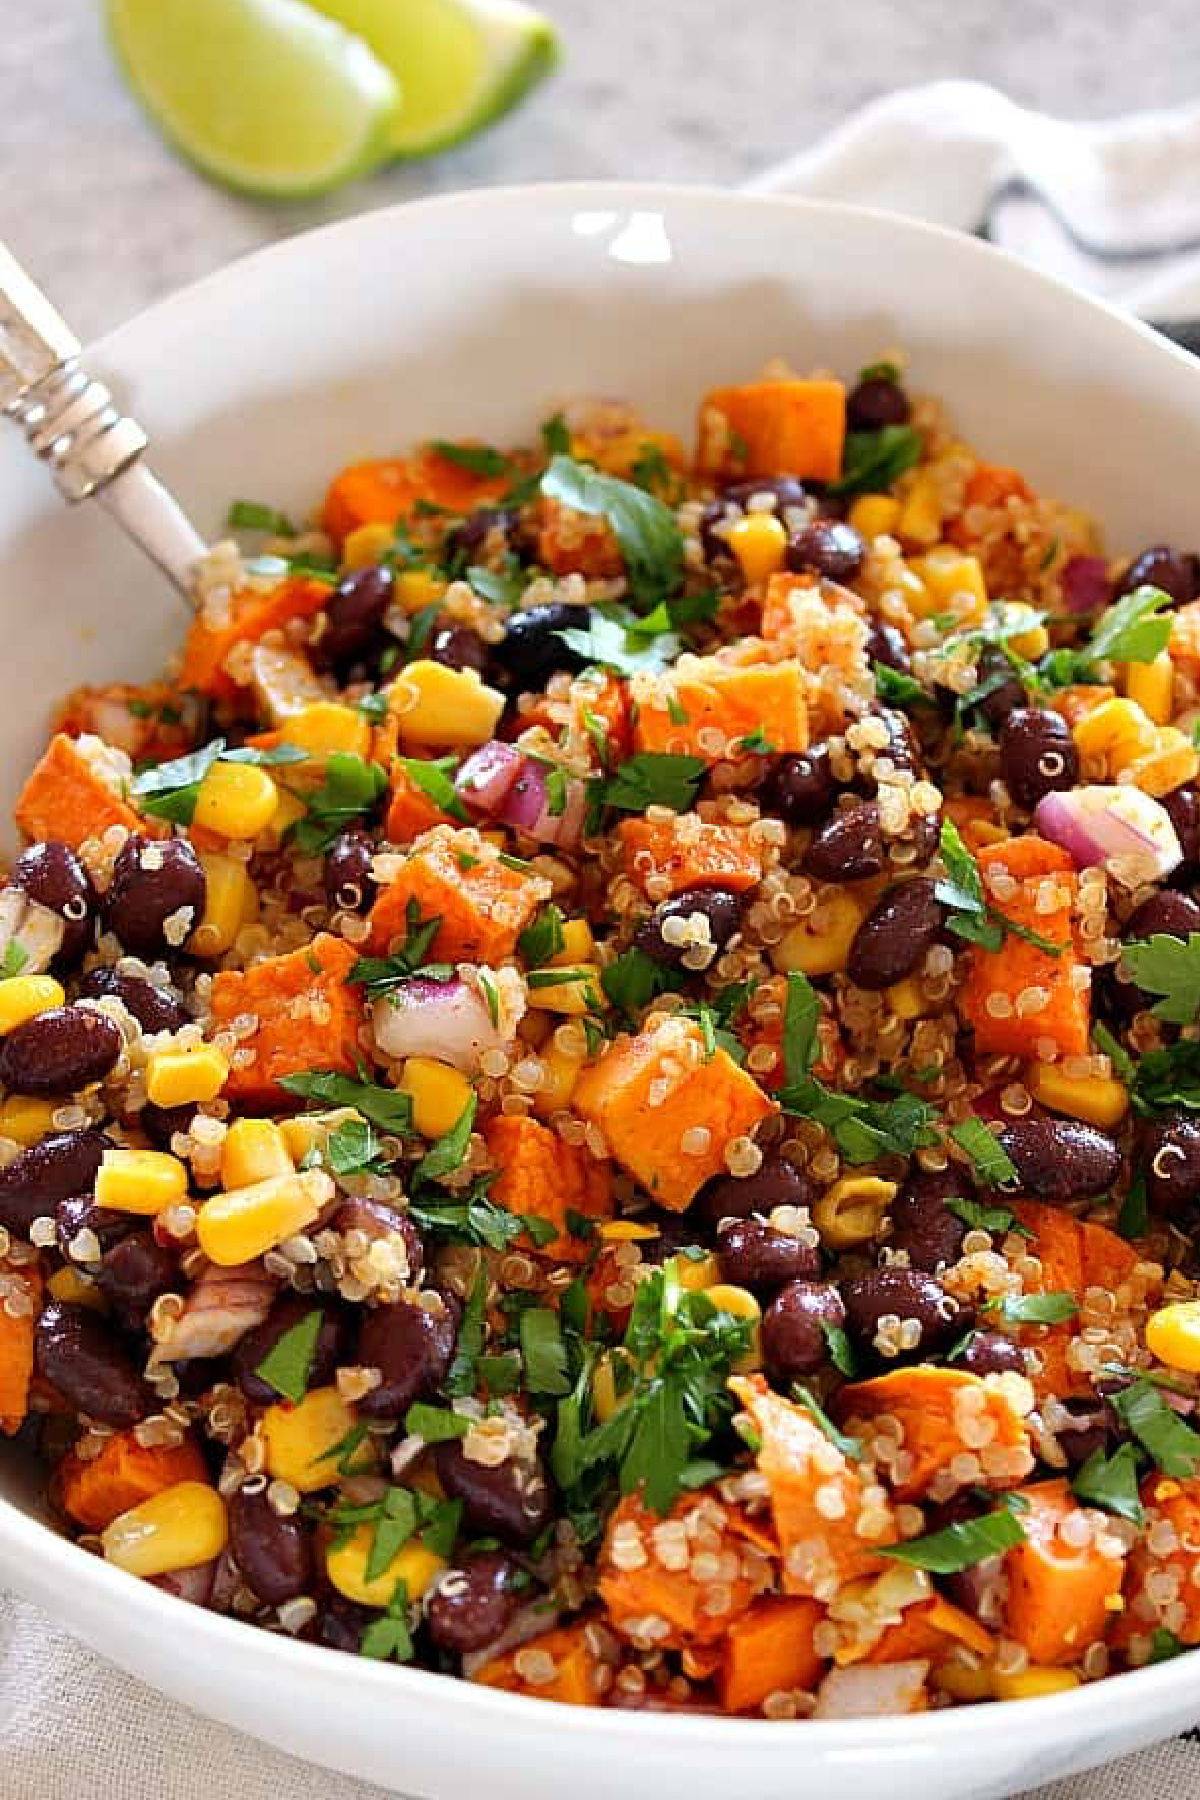 Cheap Party Food Ideas - Quinoa Salad with Veggies